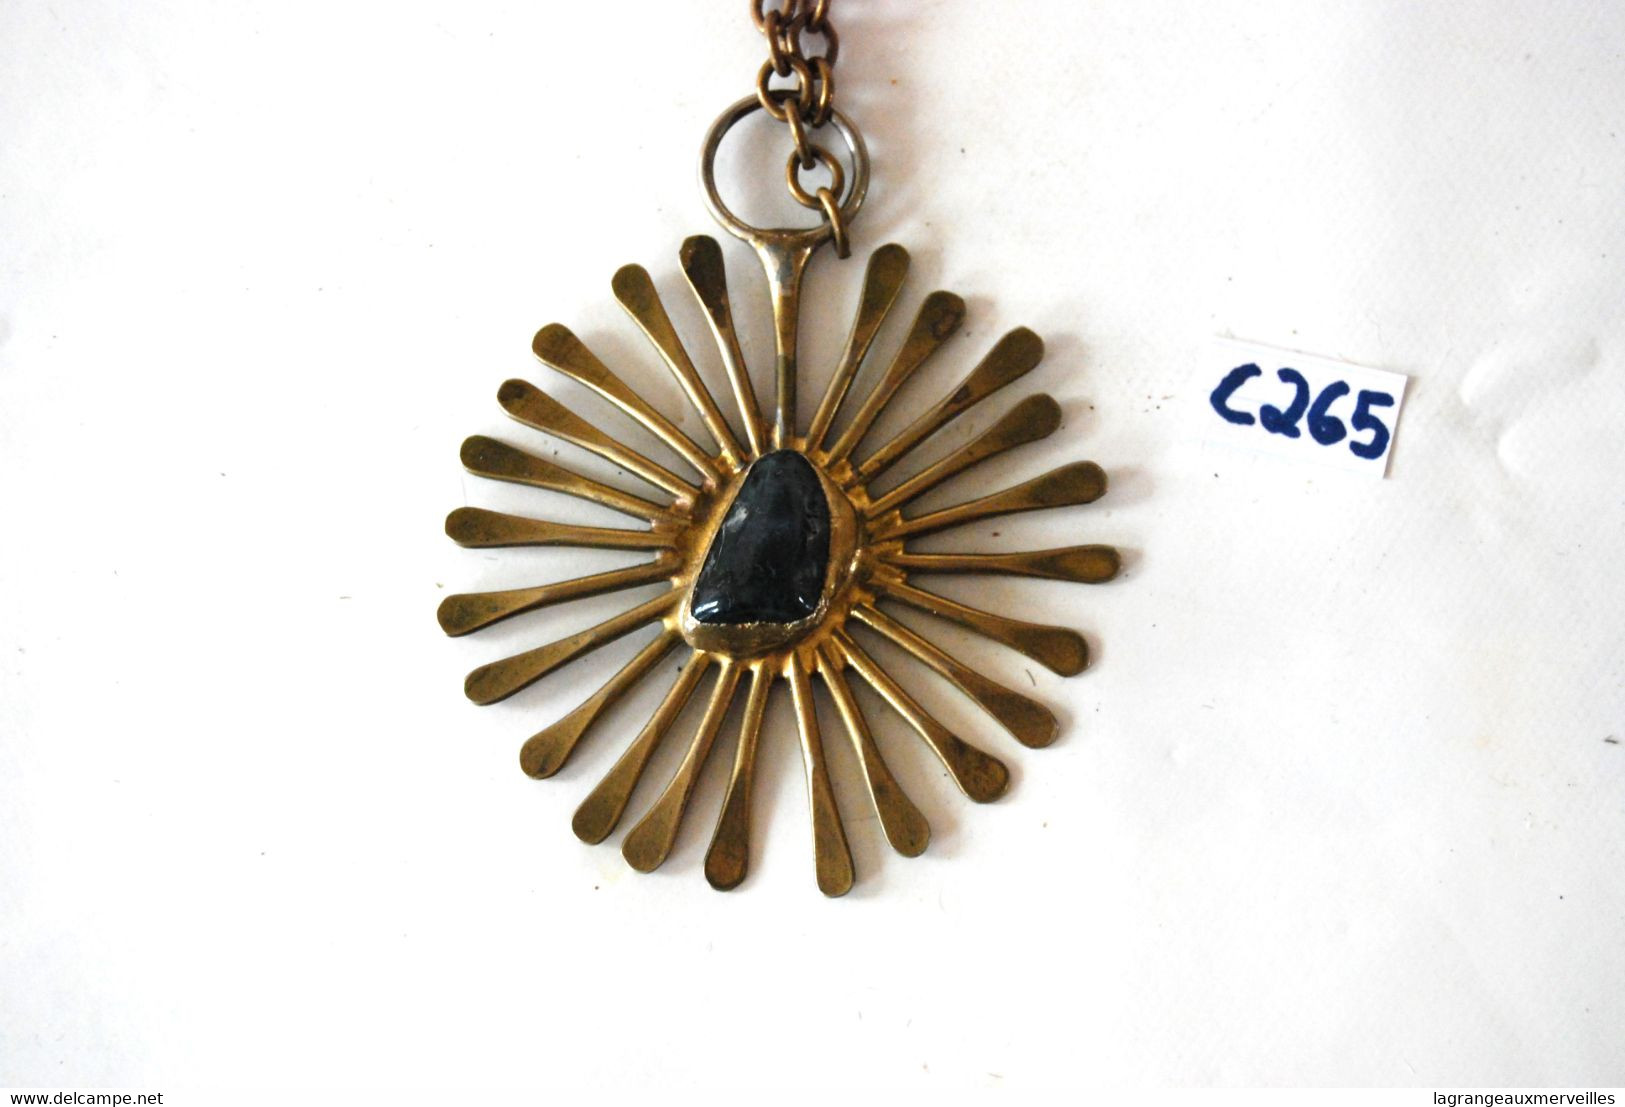 C265 Ancien Collier Moderniste - Jacob Hull Design Denmark - B+D - Rare Design Vintage - Colliers/Chaînes